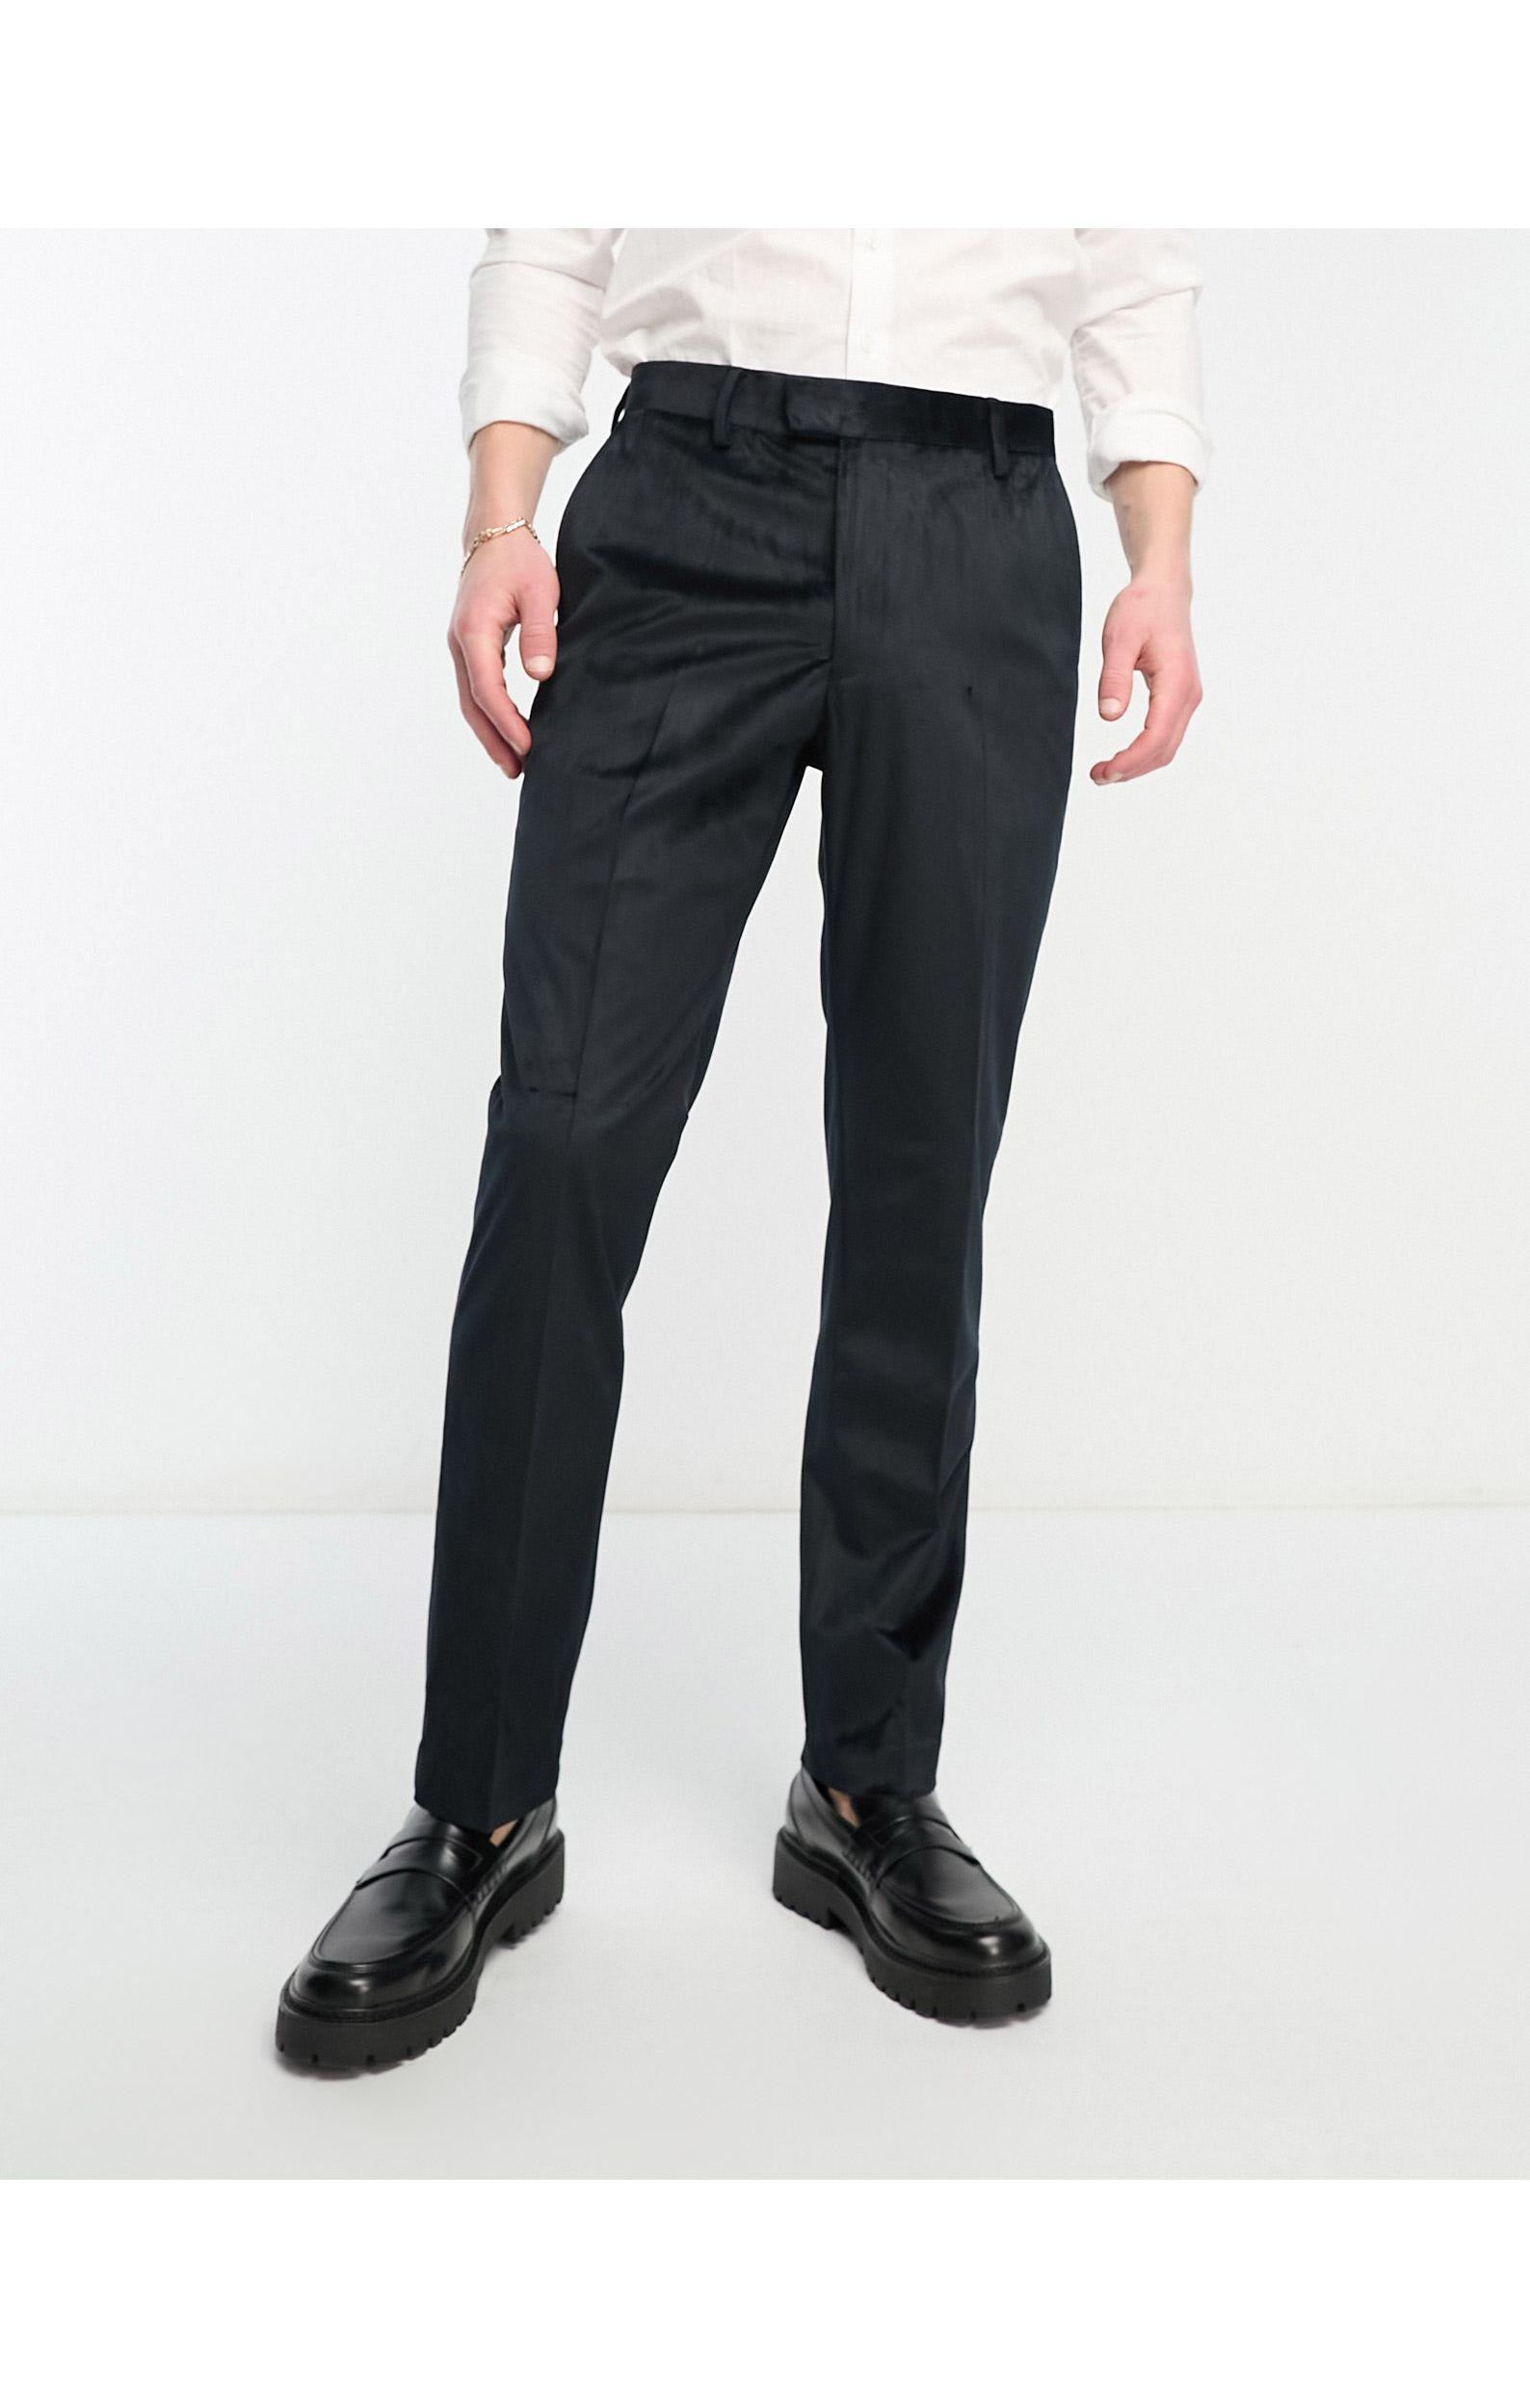 ASOS DESIGN Curve jersey split front suit pants in black velvet | ASOS